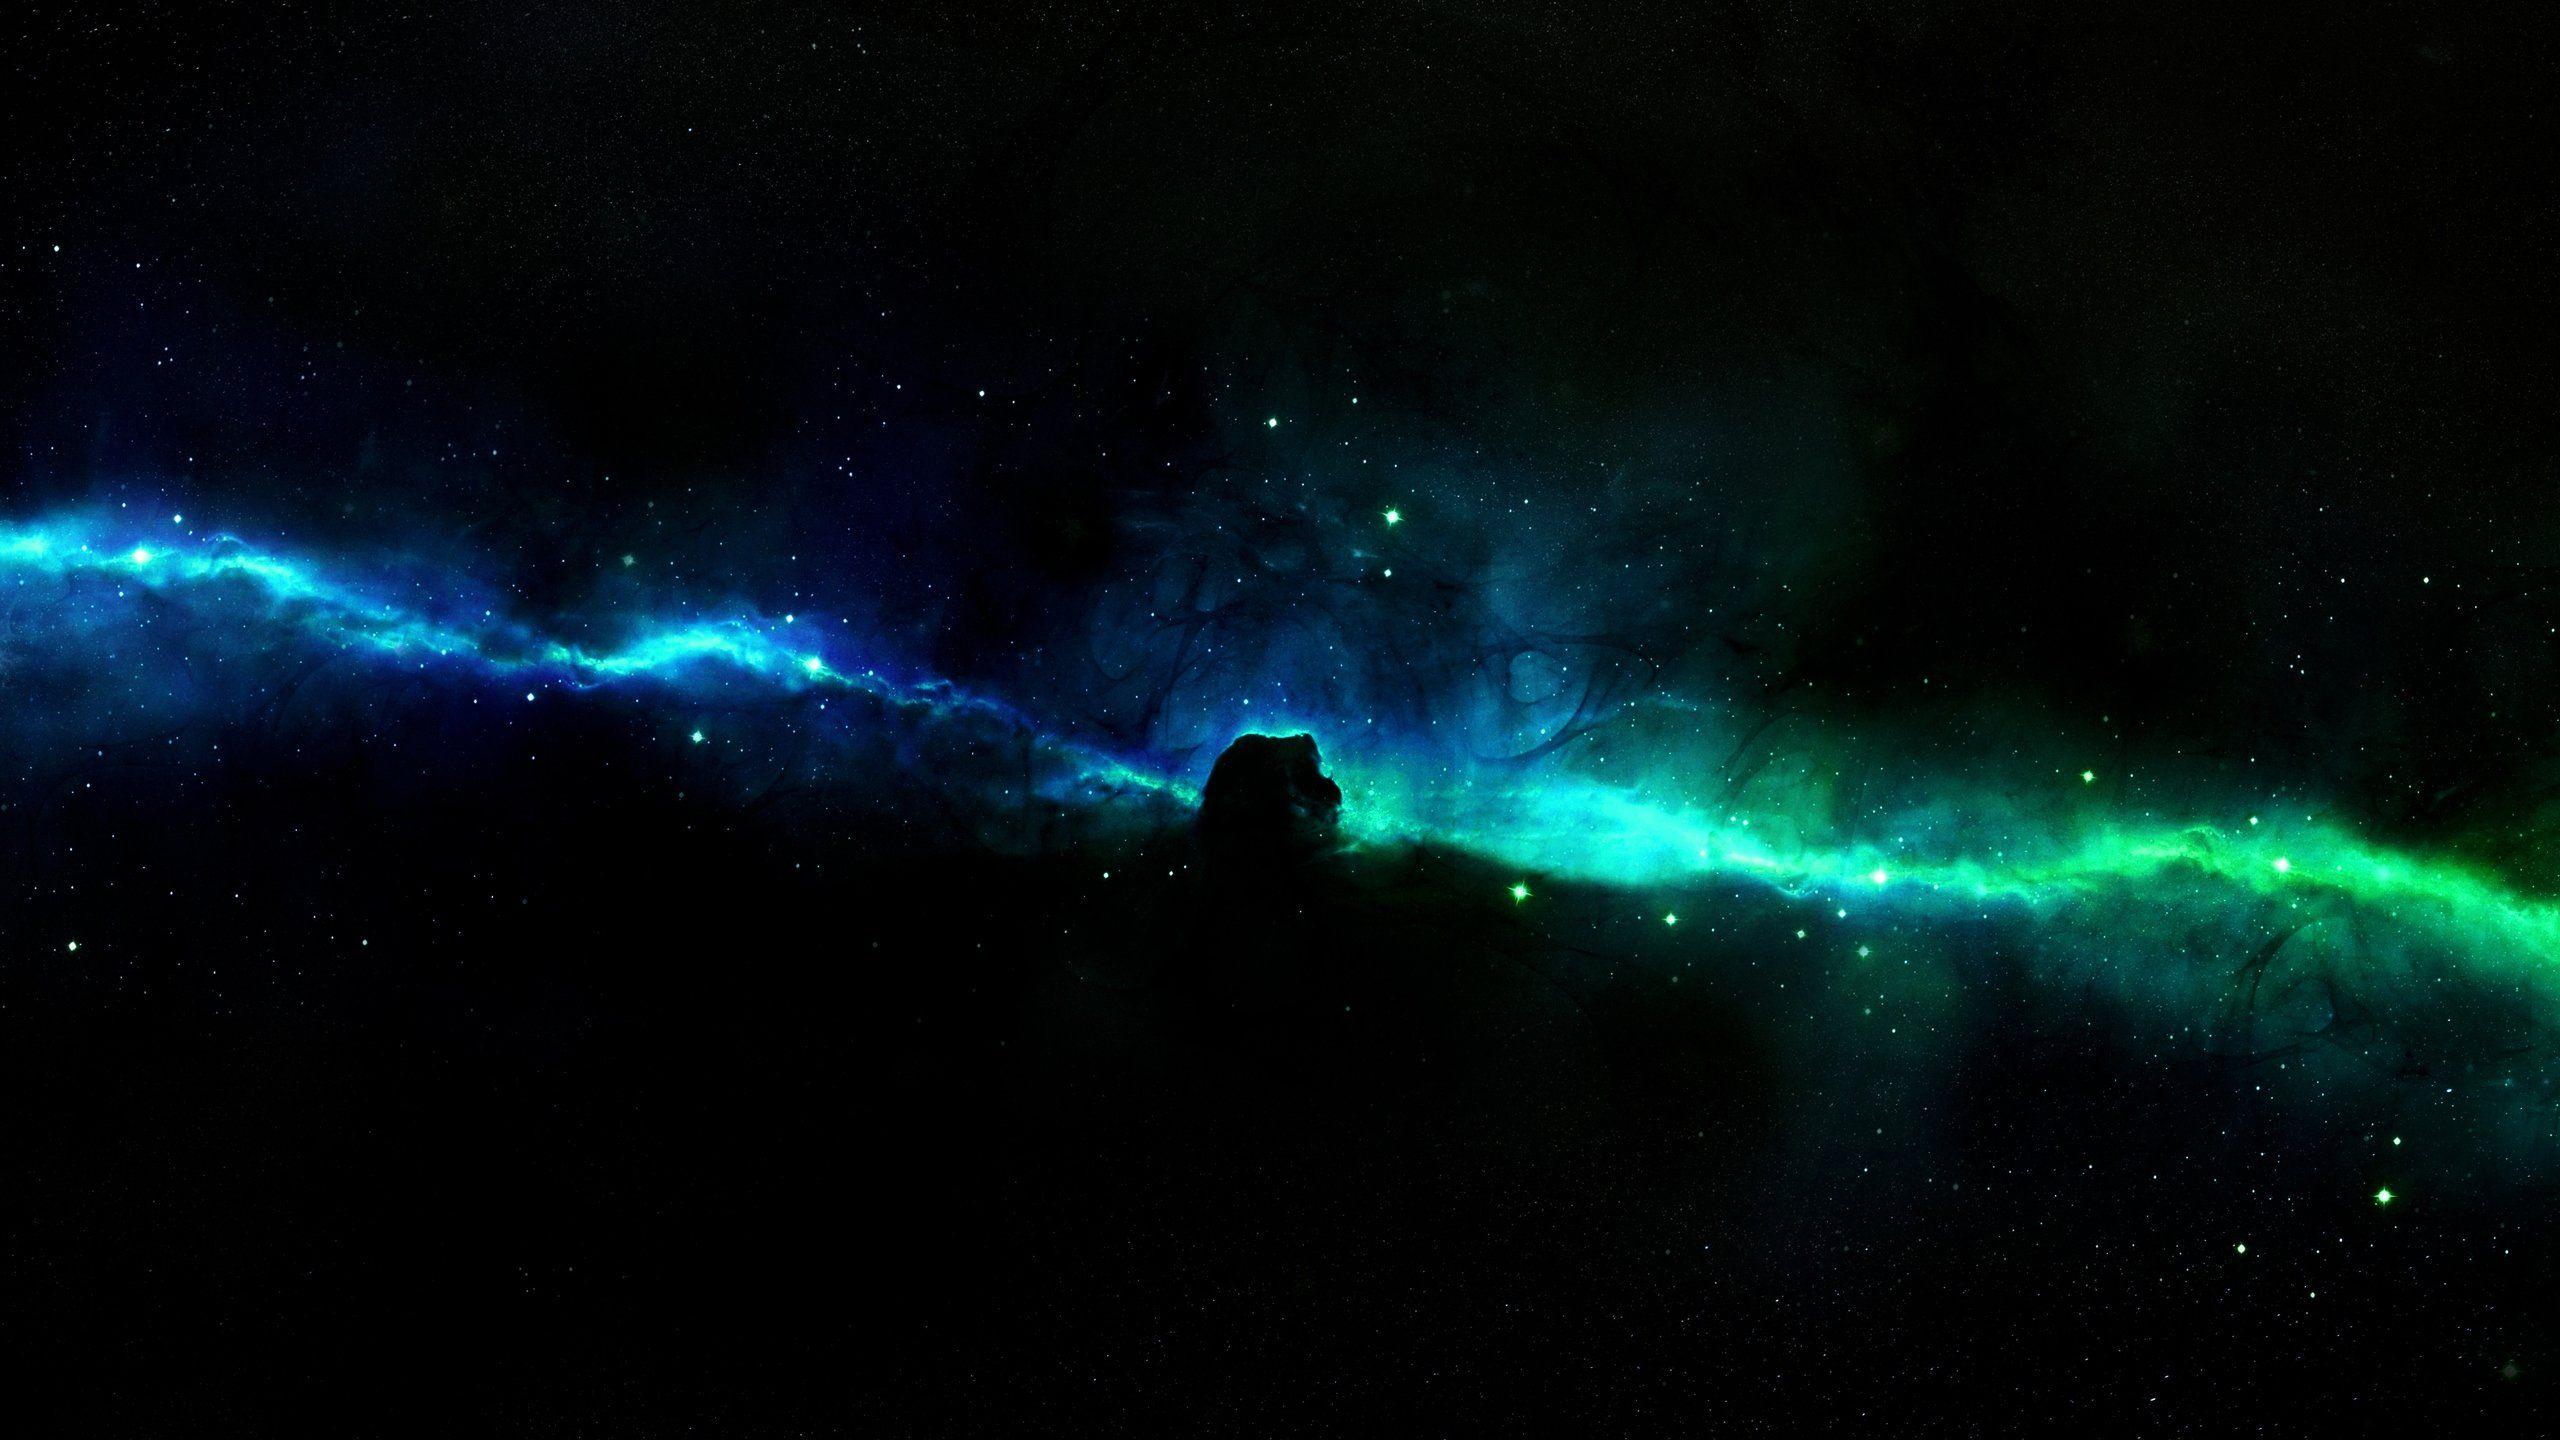 Aurora at space HD 16213 high resolution wallpaper